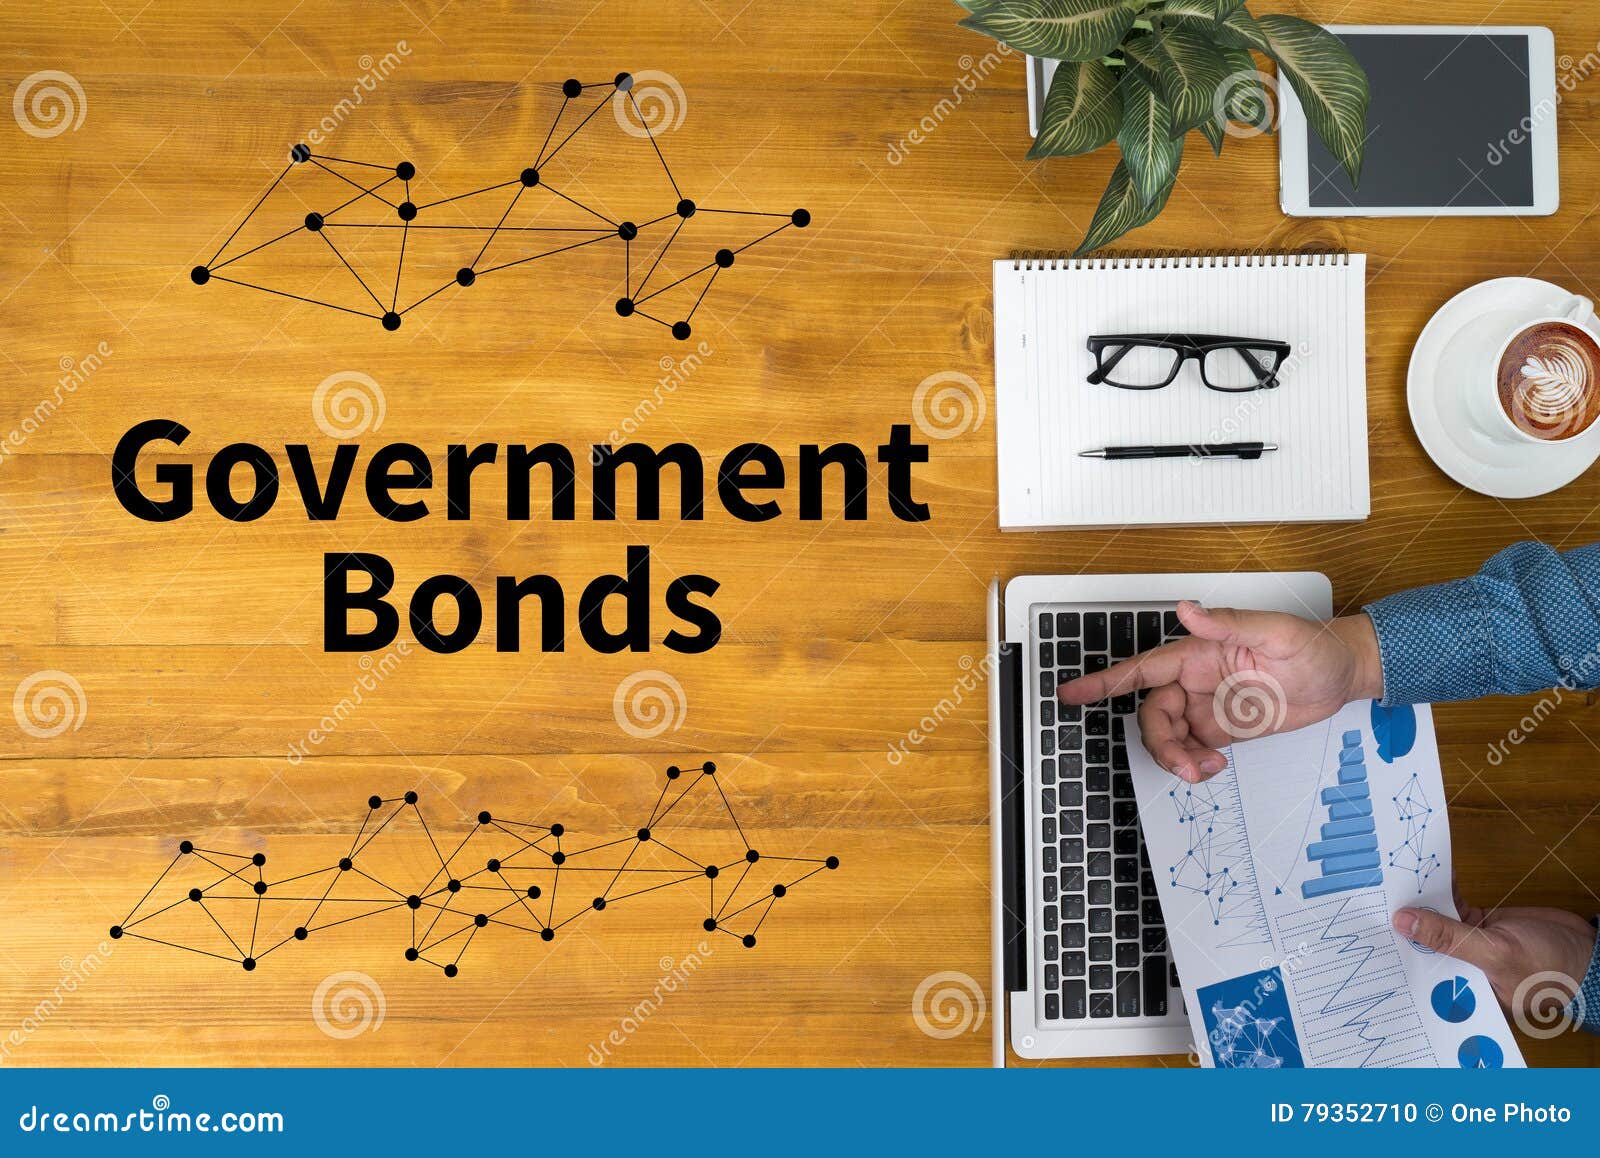 government bonds, bond market